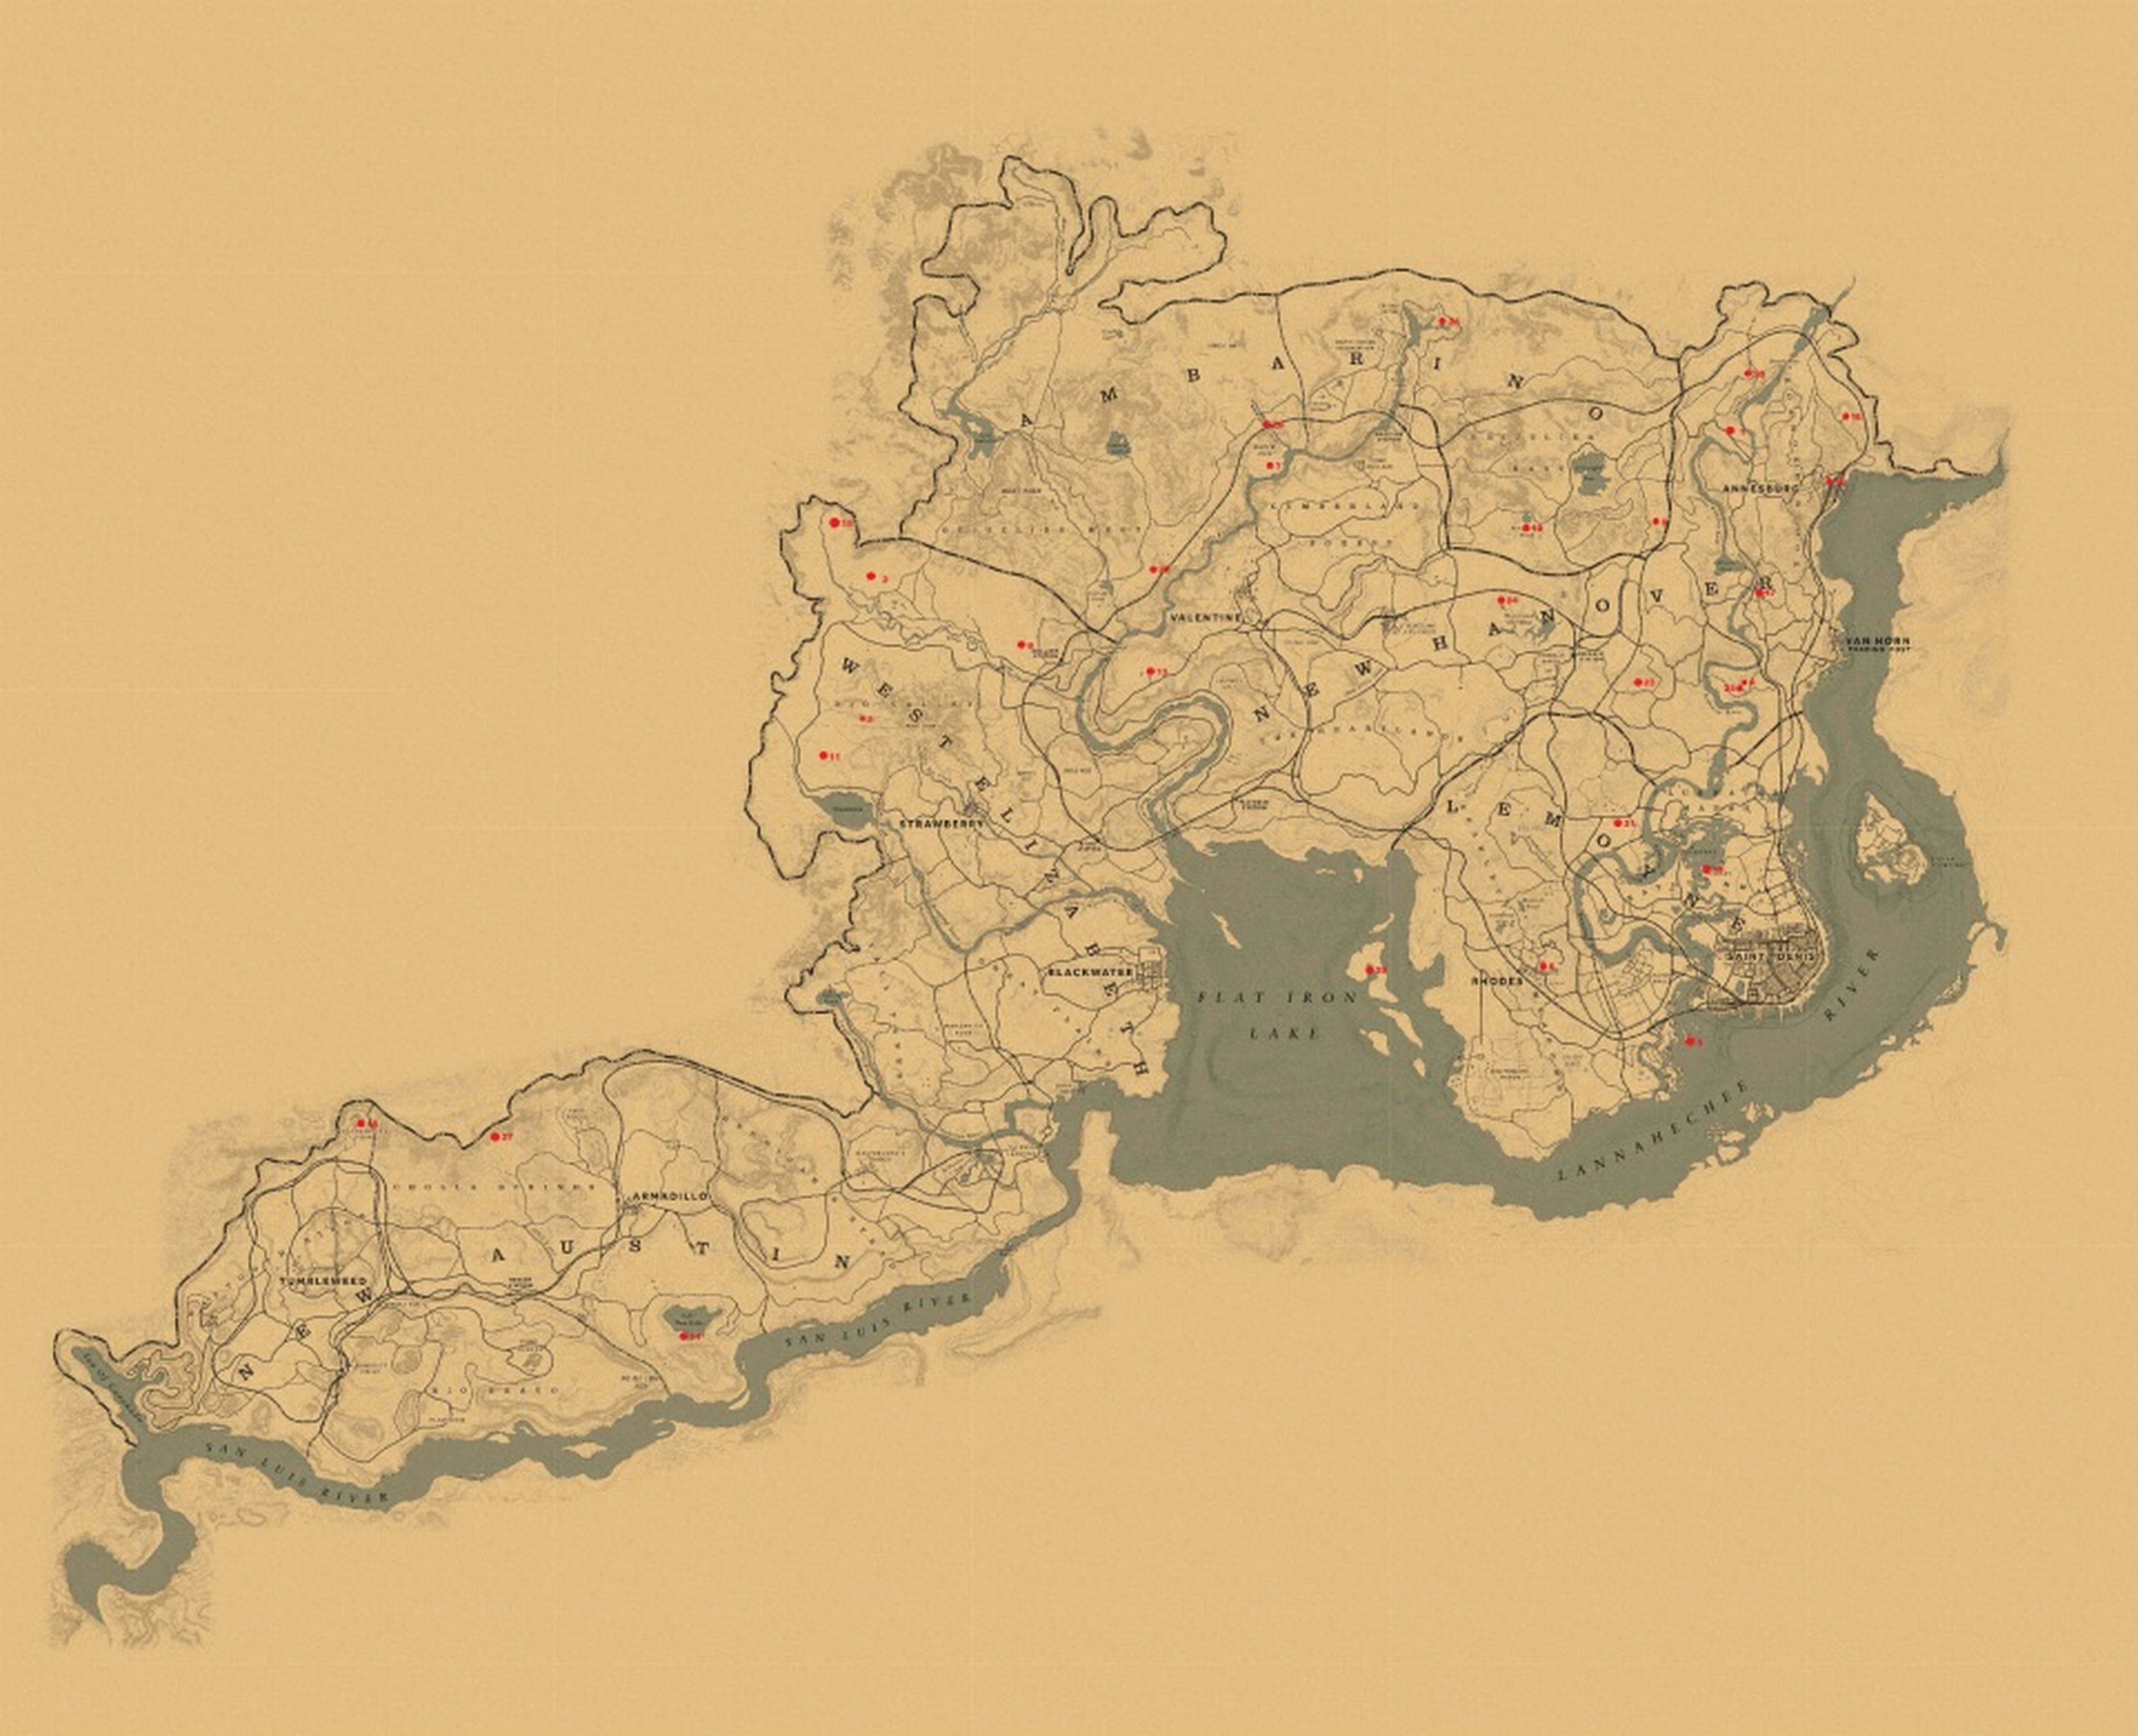 Mapa Red Dead Redemption 2 - Objetos únicos